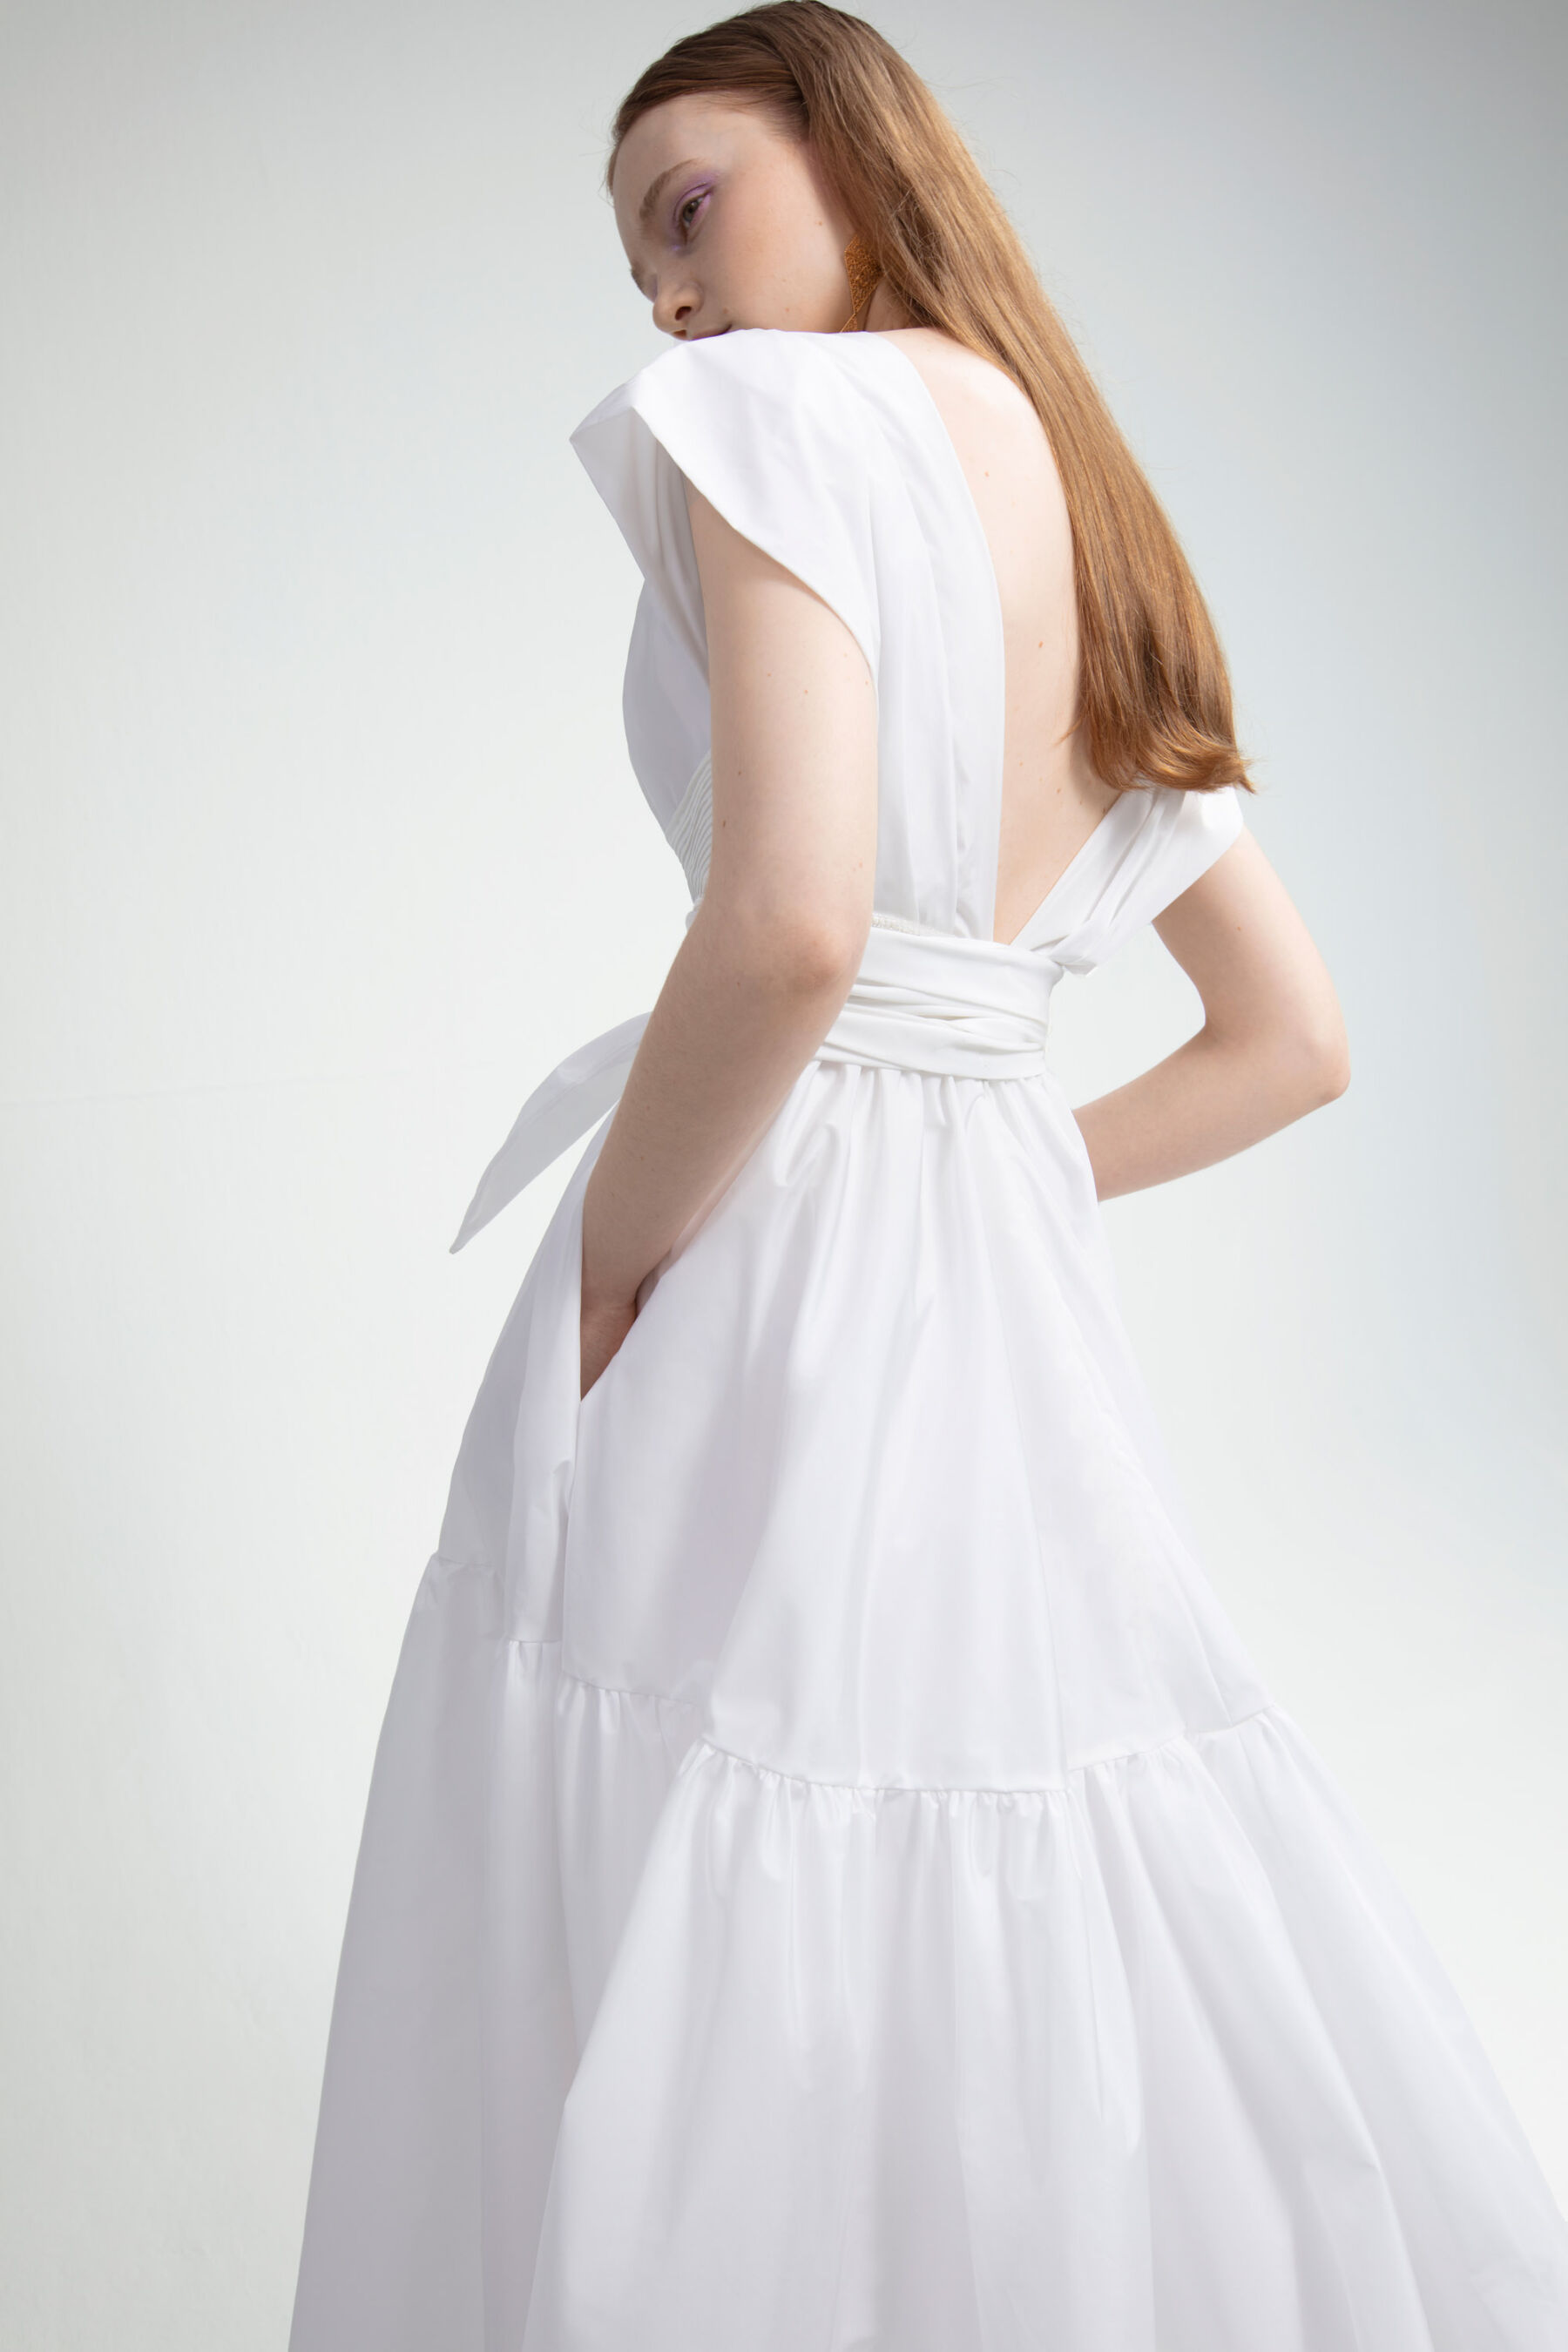 Yolancris modern wedding dress with pockets